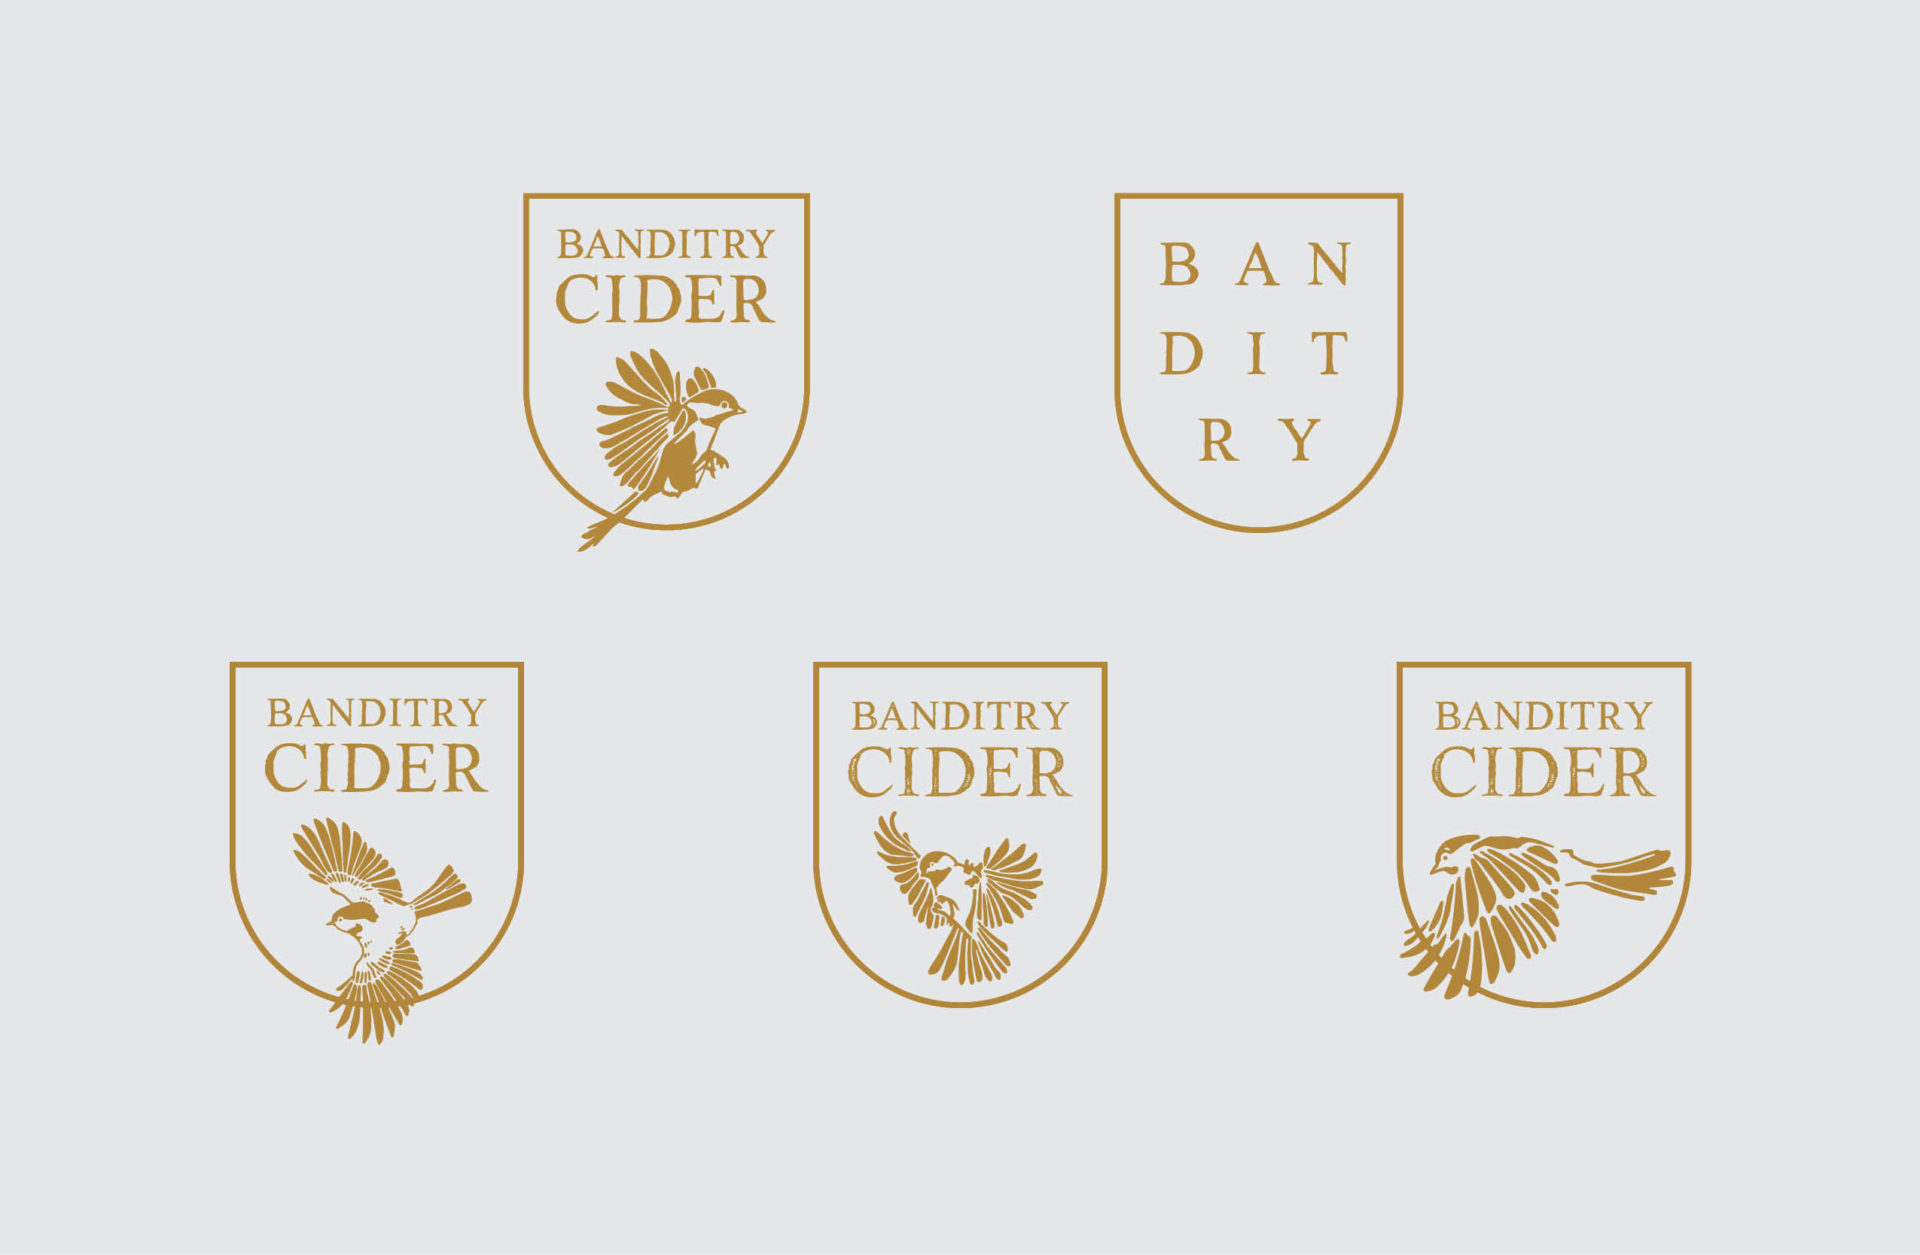 Banditry Cider logo lockups